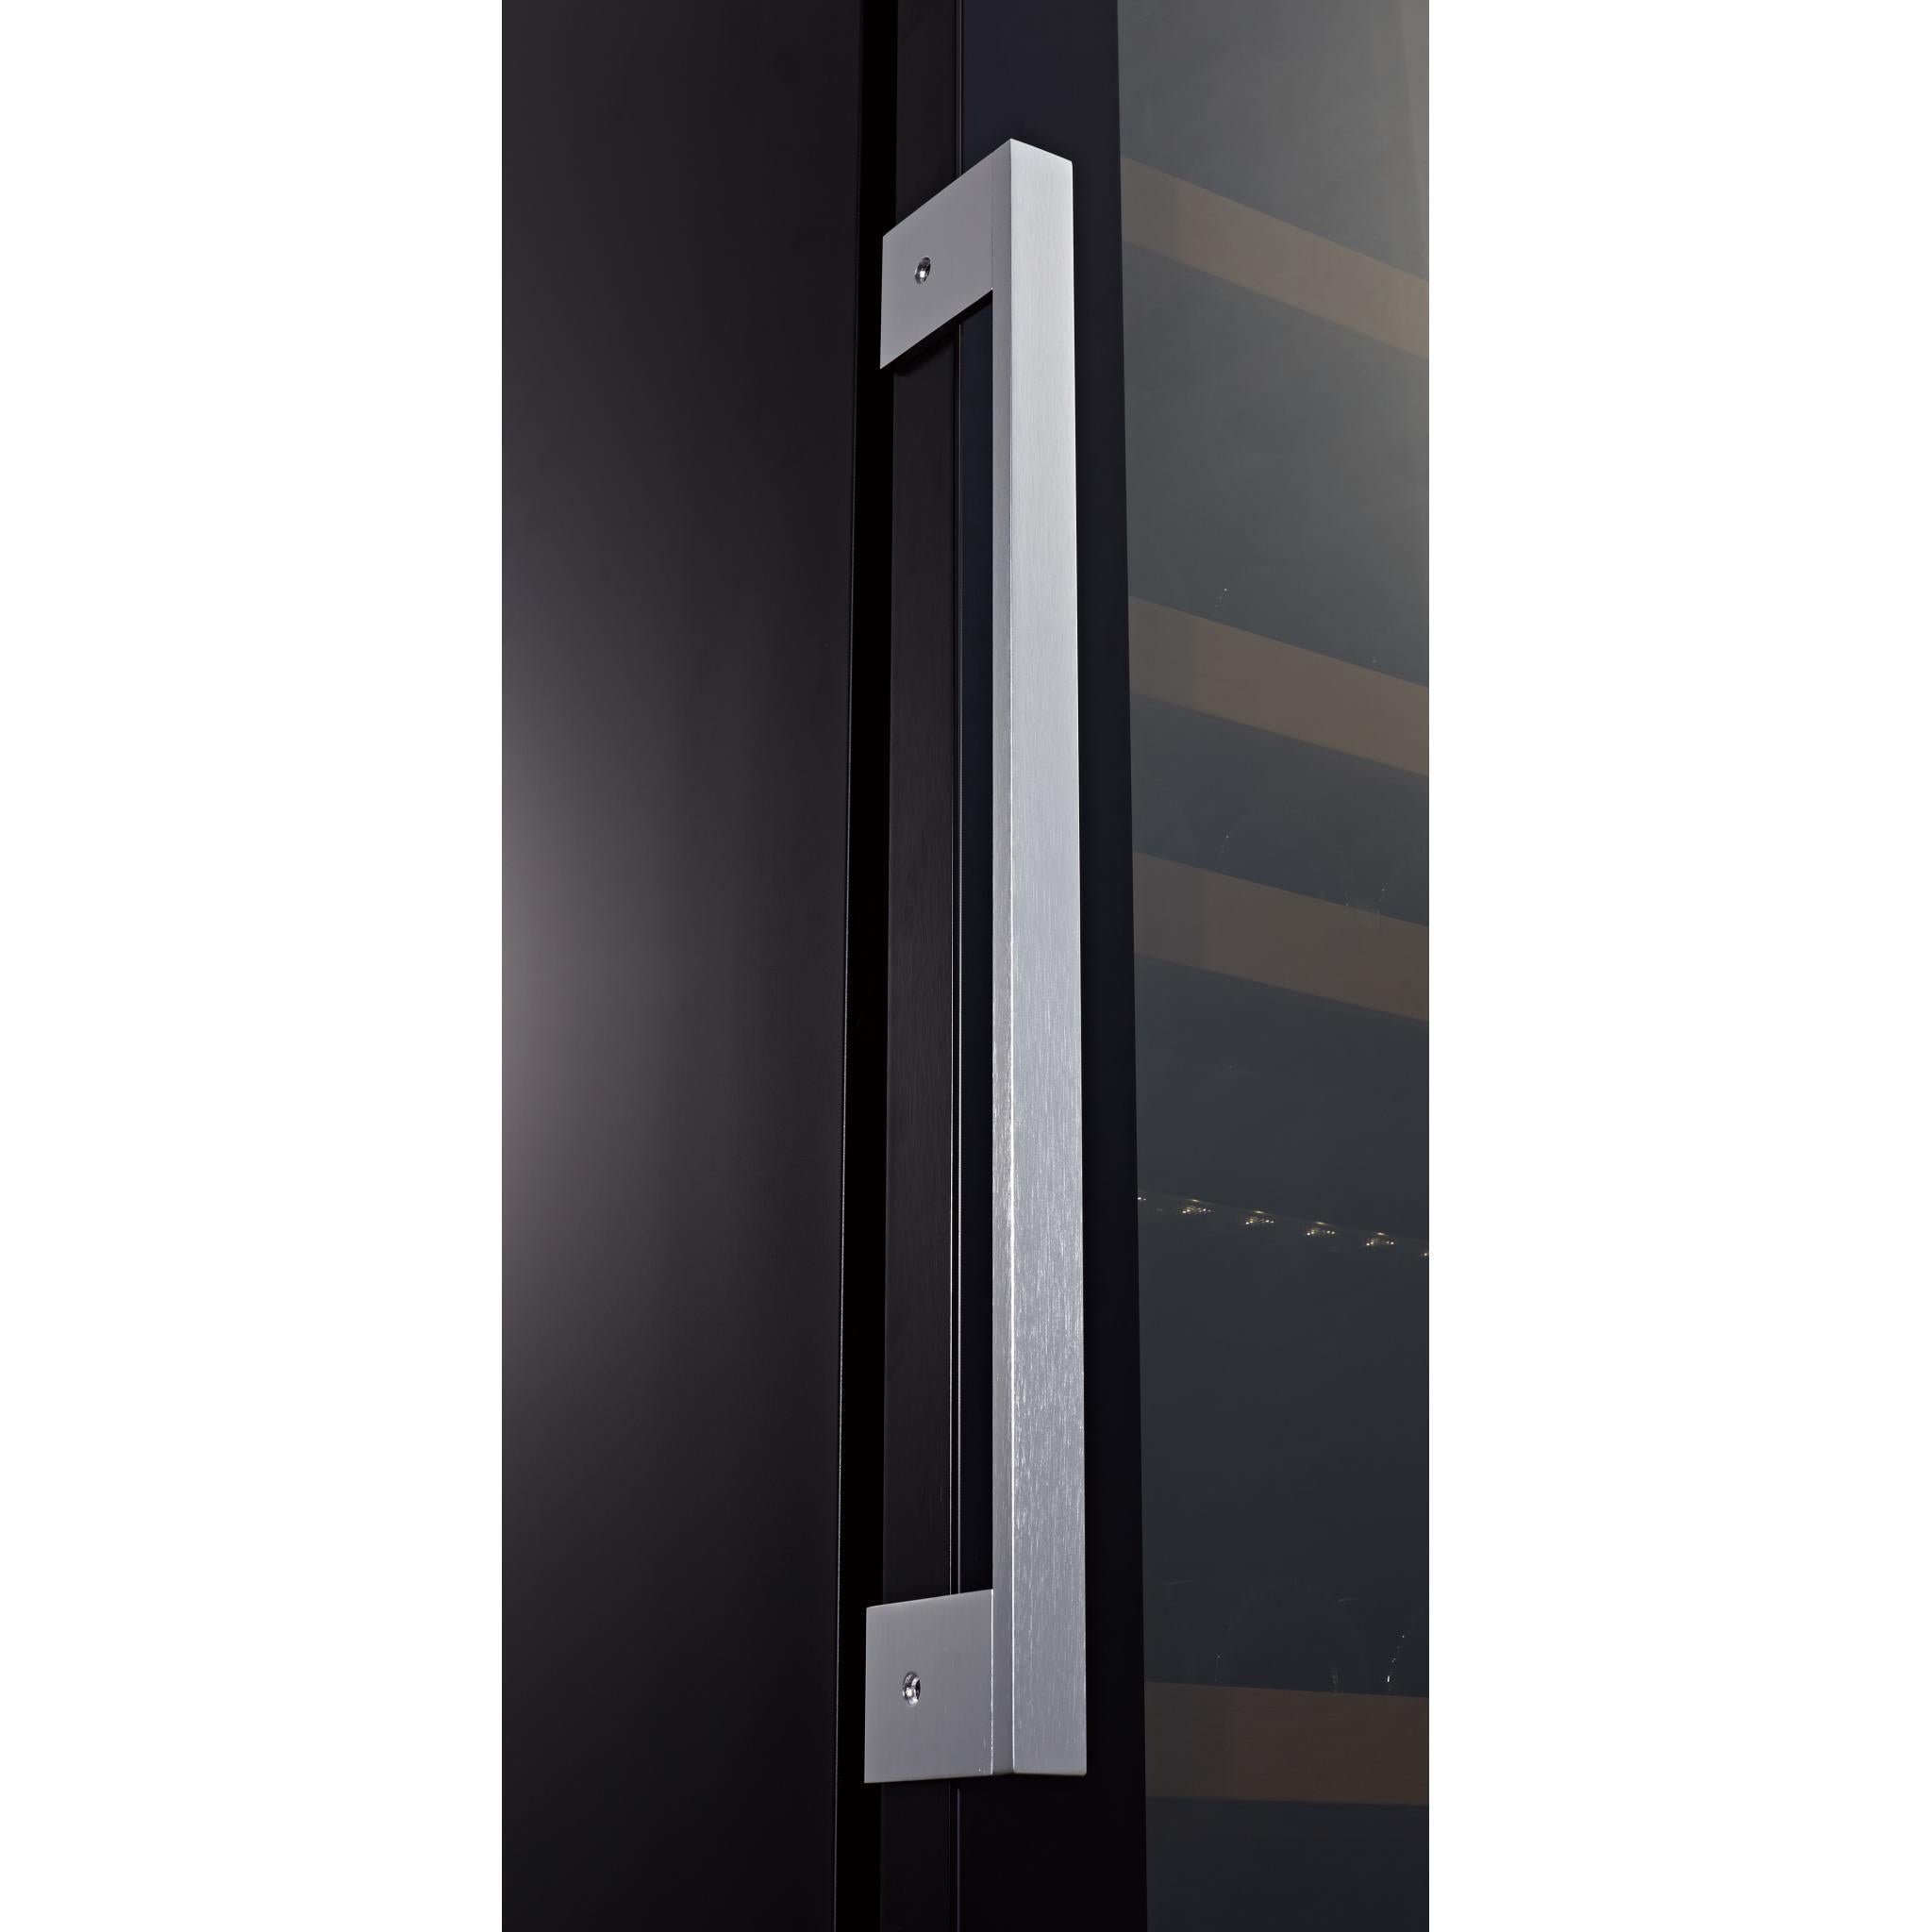 Swisscave WLB-460DF - Black Edition Dual Zone Cabinet (168 - 200 BOT) - 595mm Wide - winestorageuk